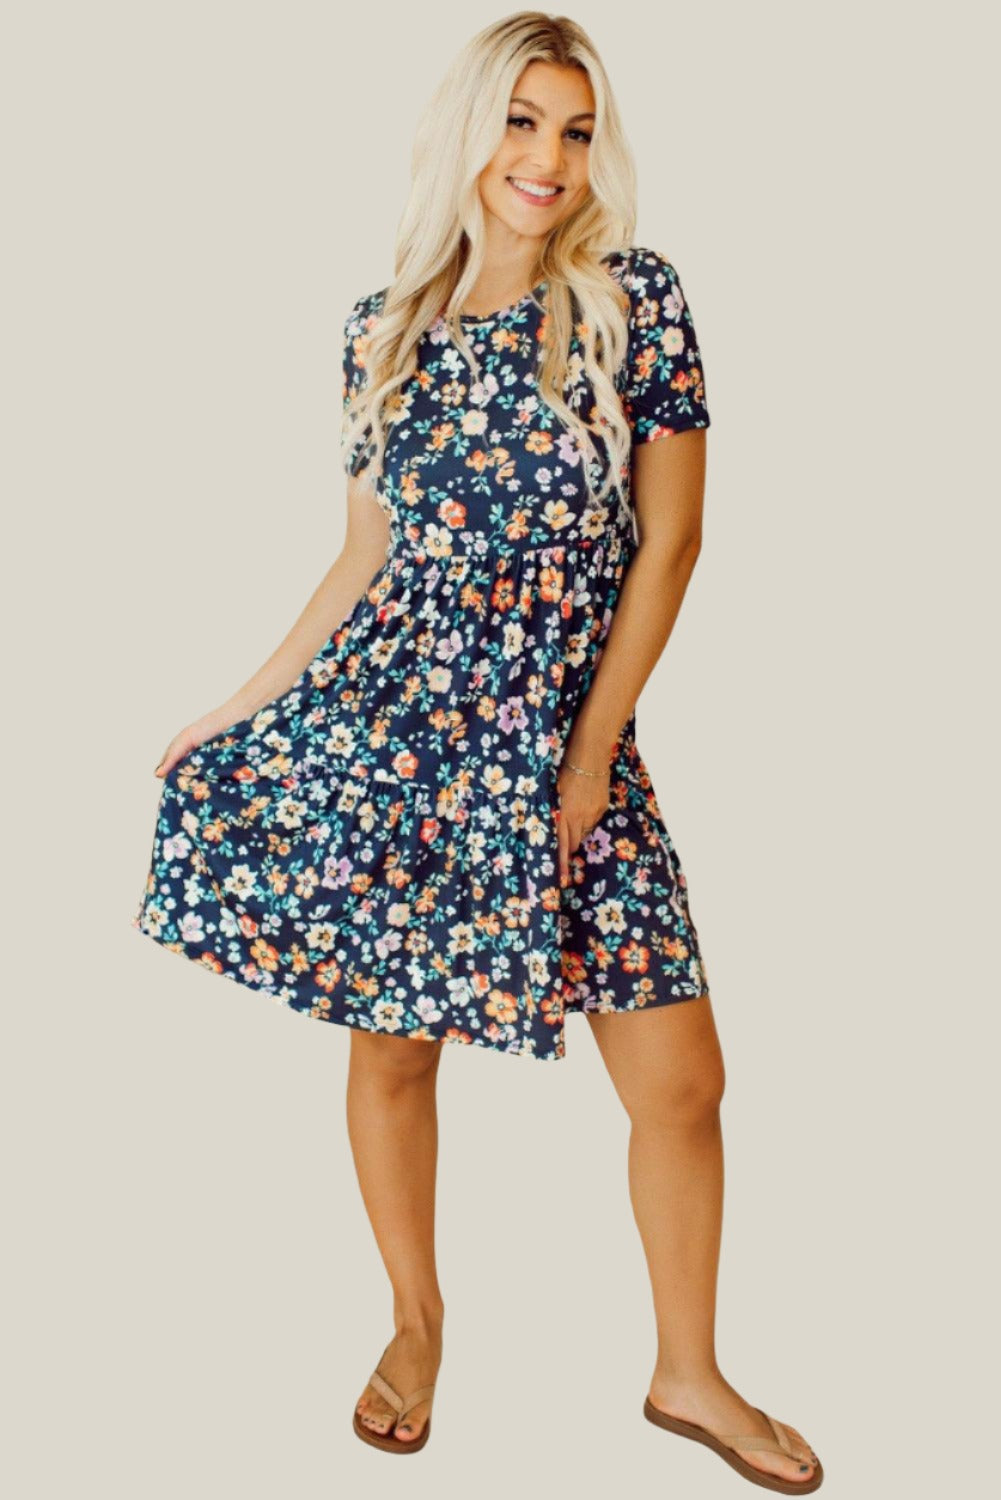 Blue Floral Print Short Sleeve Mini Dress for Summer